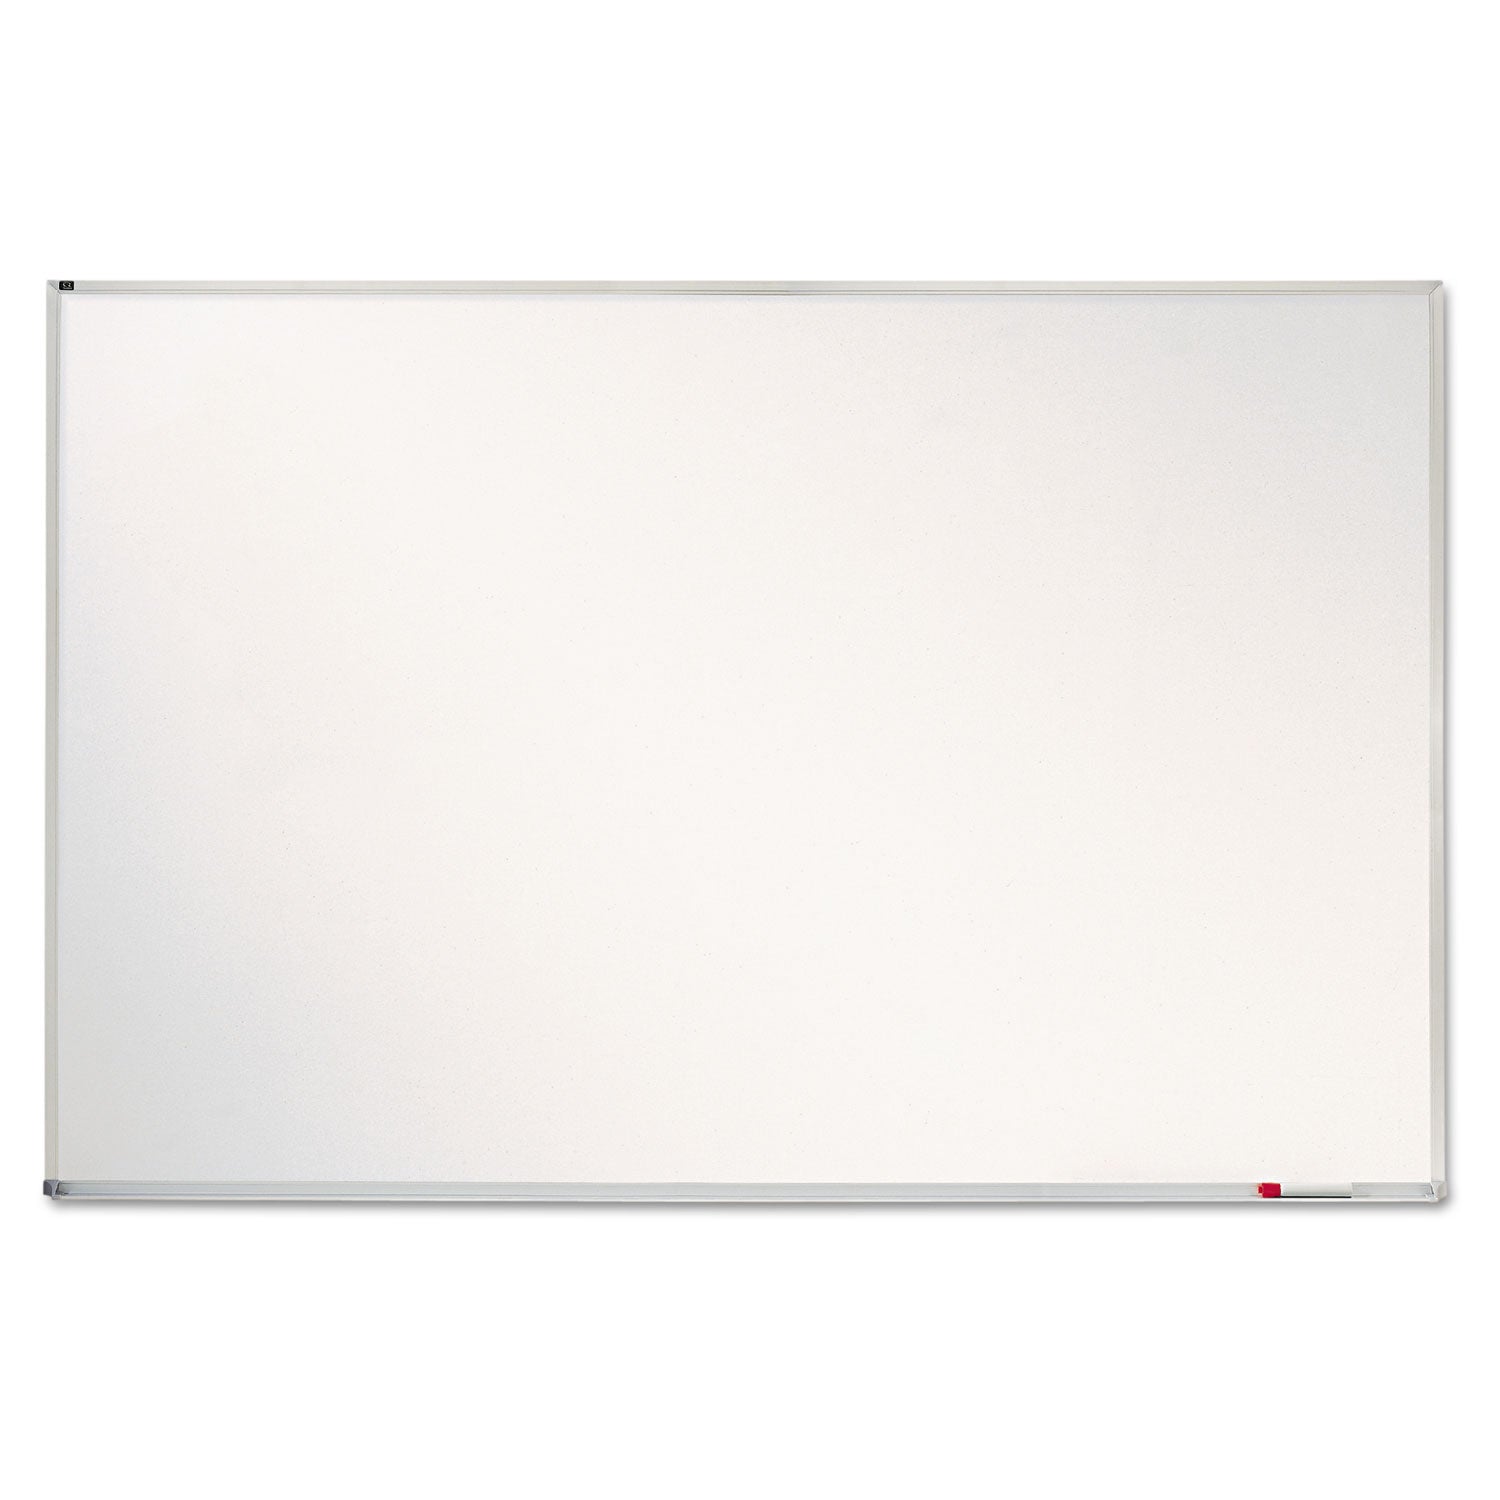 Porcelain Magnetic Whiteboard, 72 x 48, White Surface, Silver Aluminum Frame - 